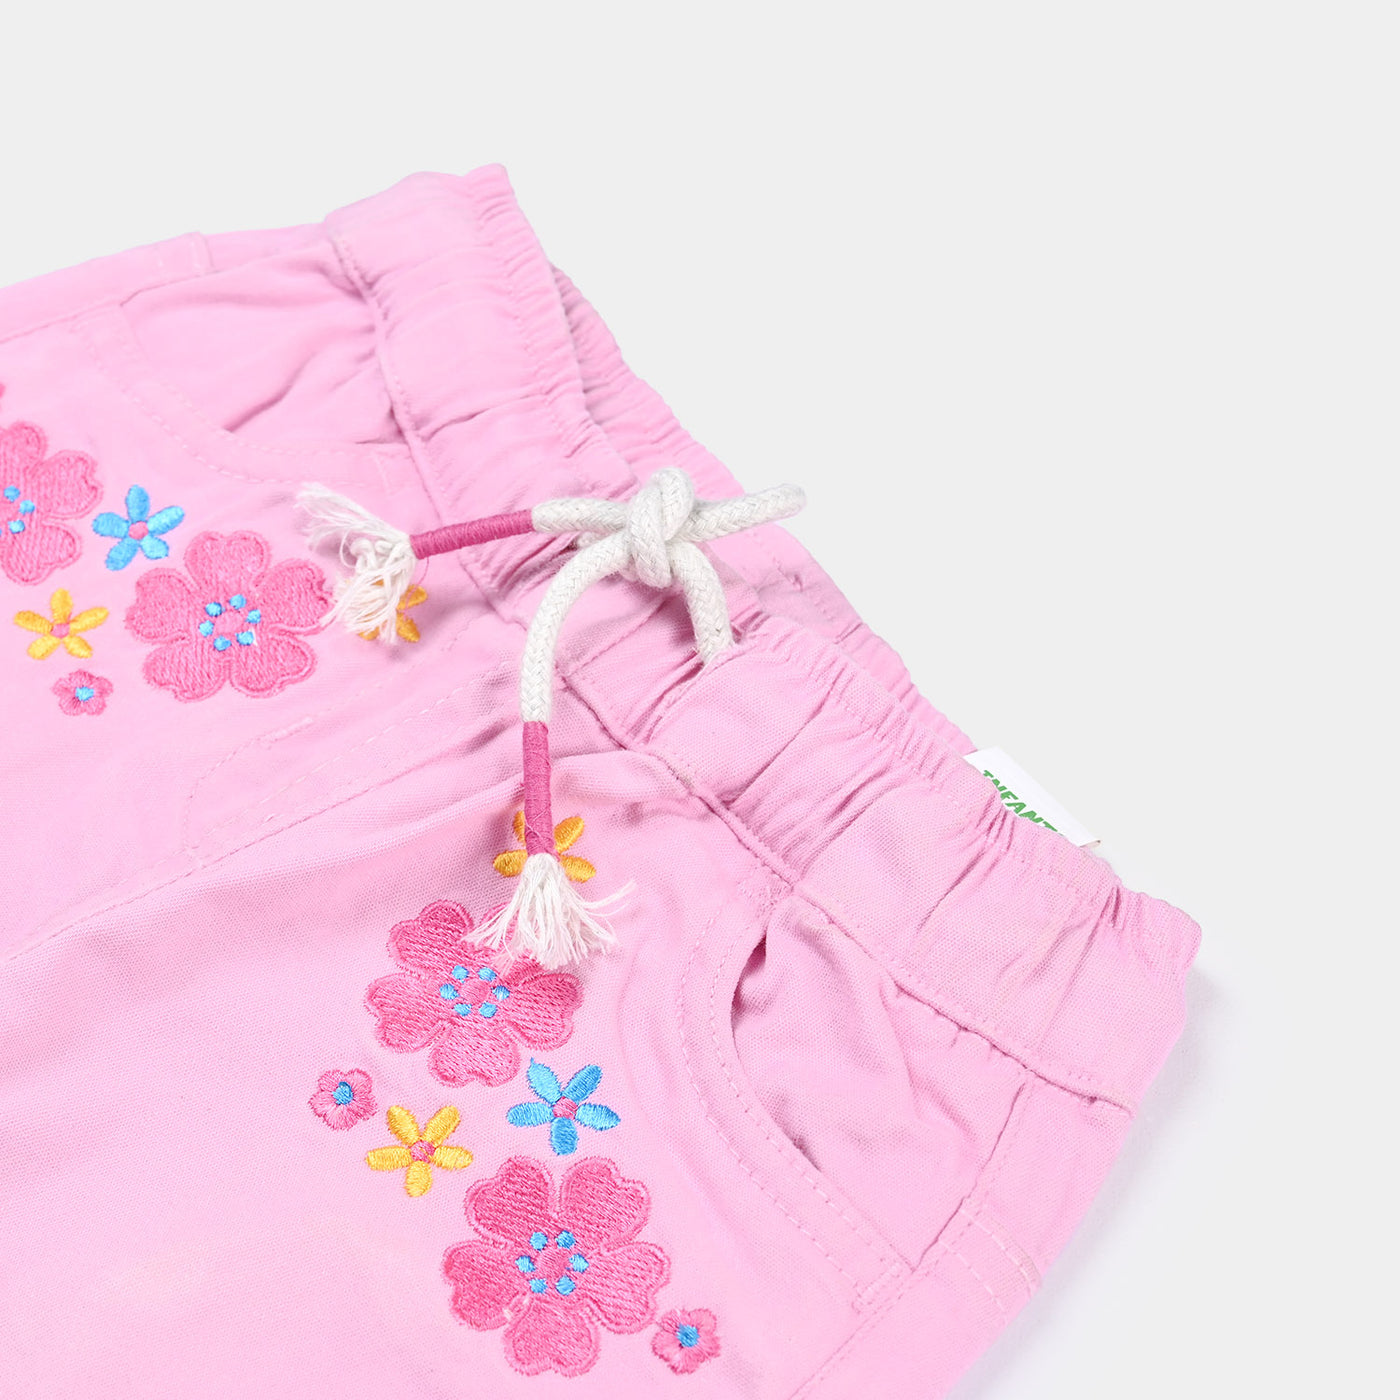 Infant Girls Cotton Twill Pant EMB-C. Pink